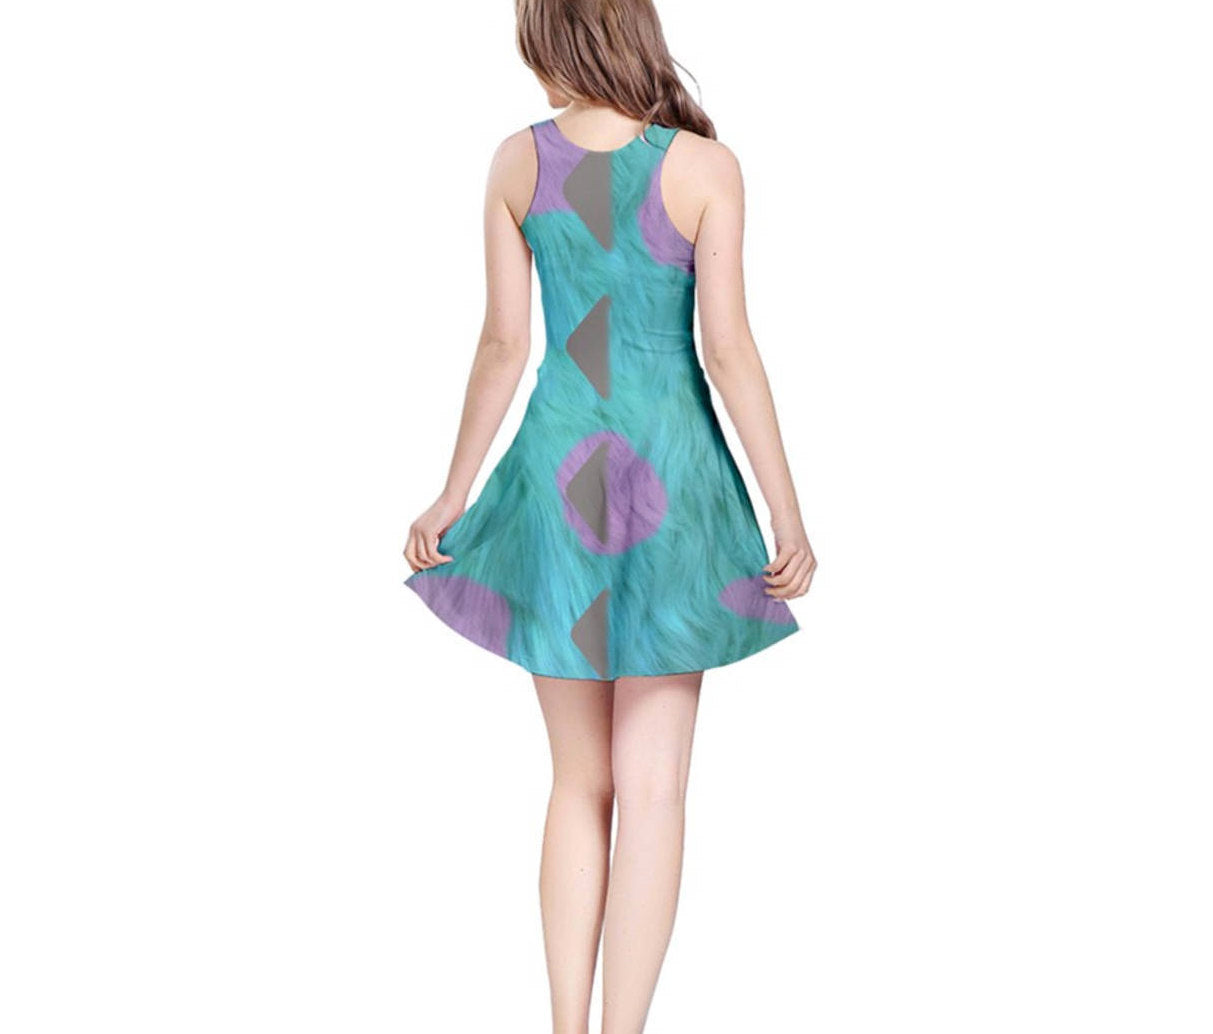 Sulley Monsters Inc Inspired Sleeveless Dress